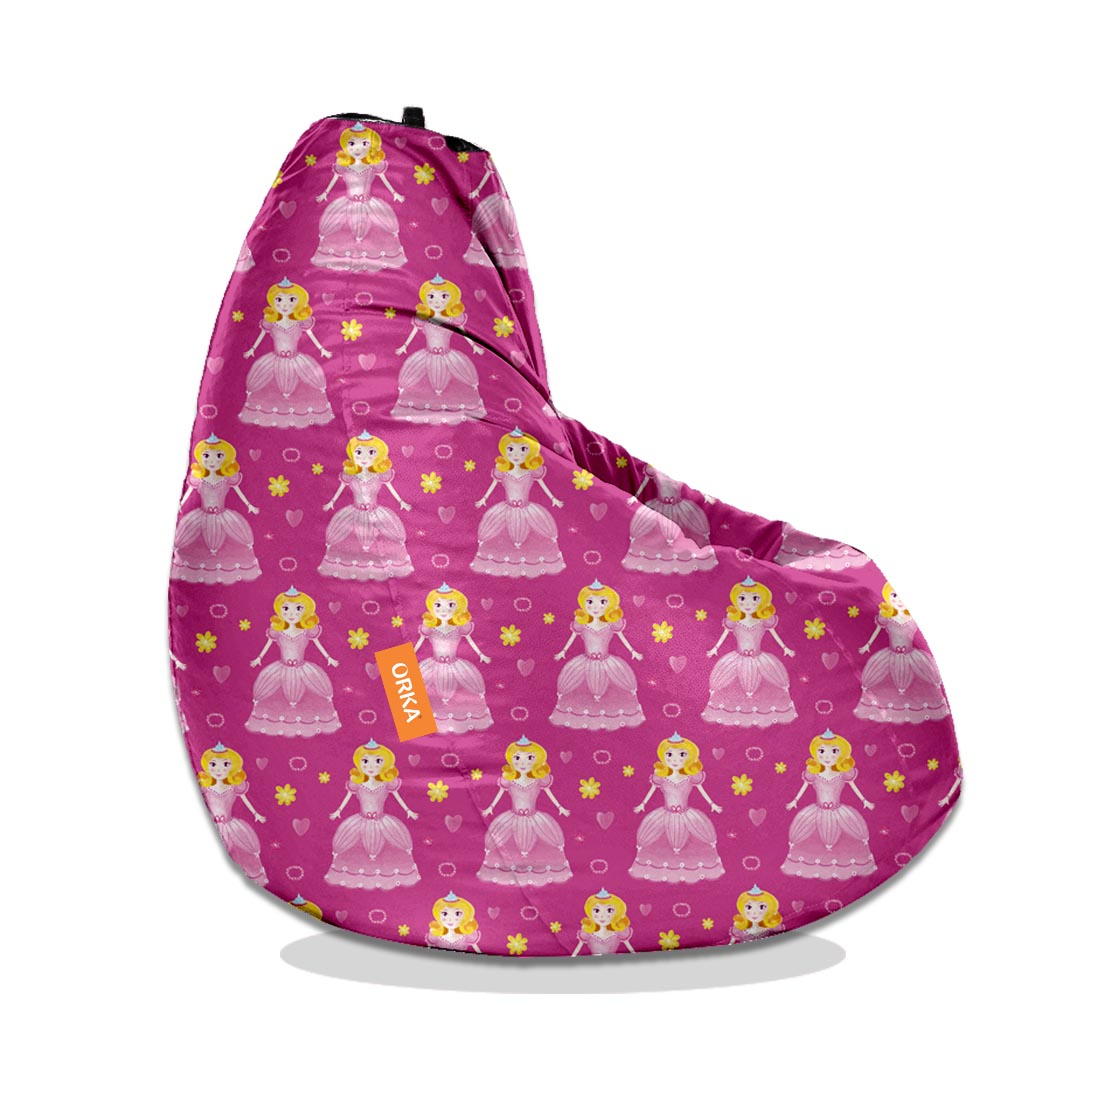 ORKA®Digital Printed Princess Theme Bean Bag 2  